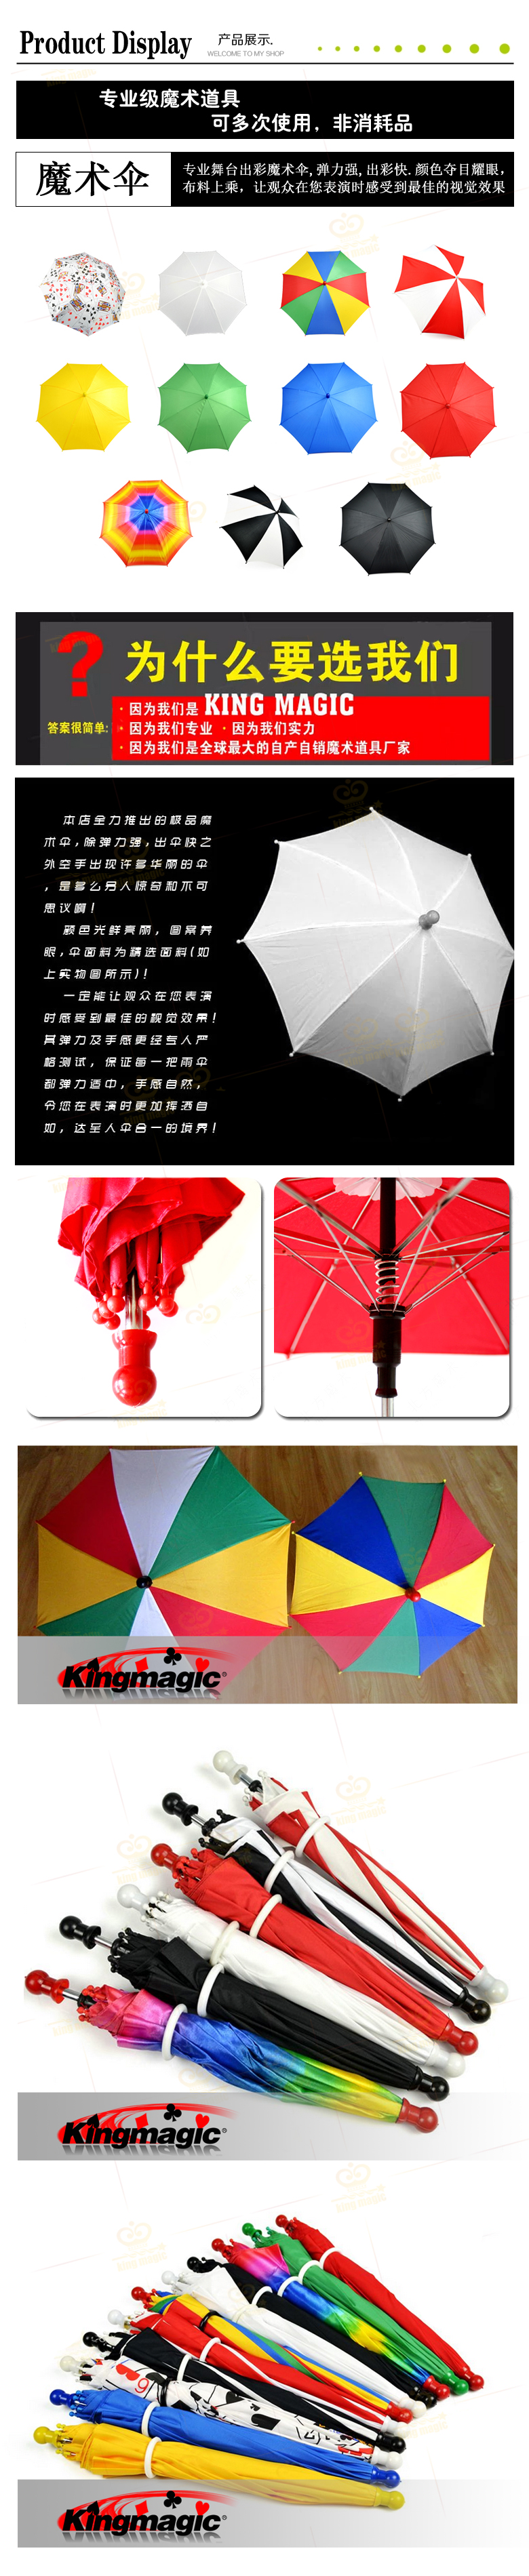 چتر کارت